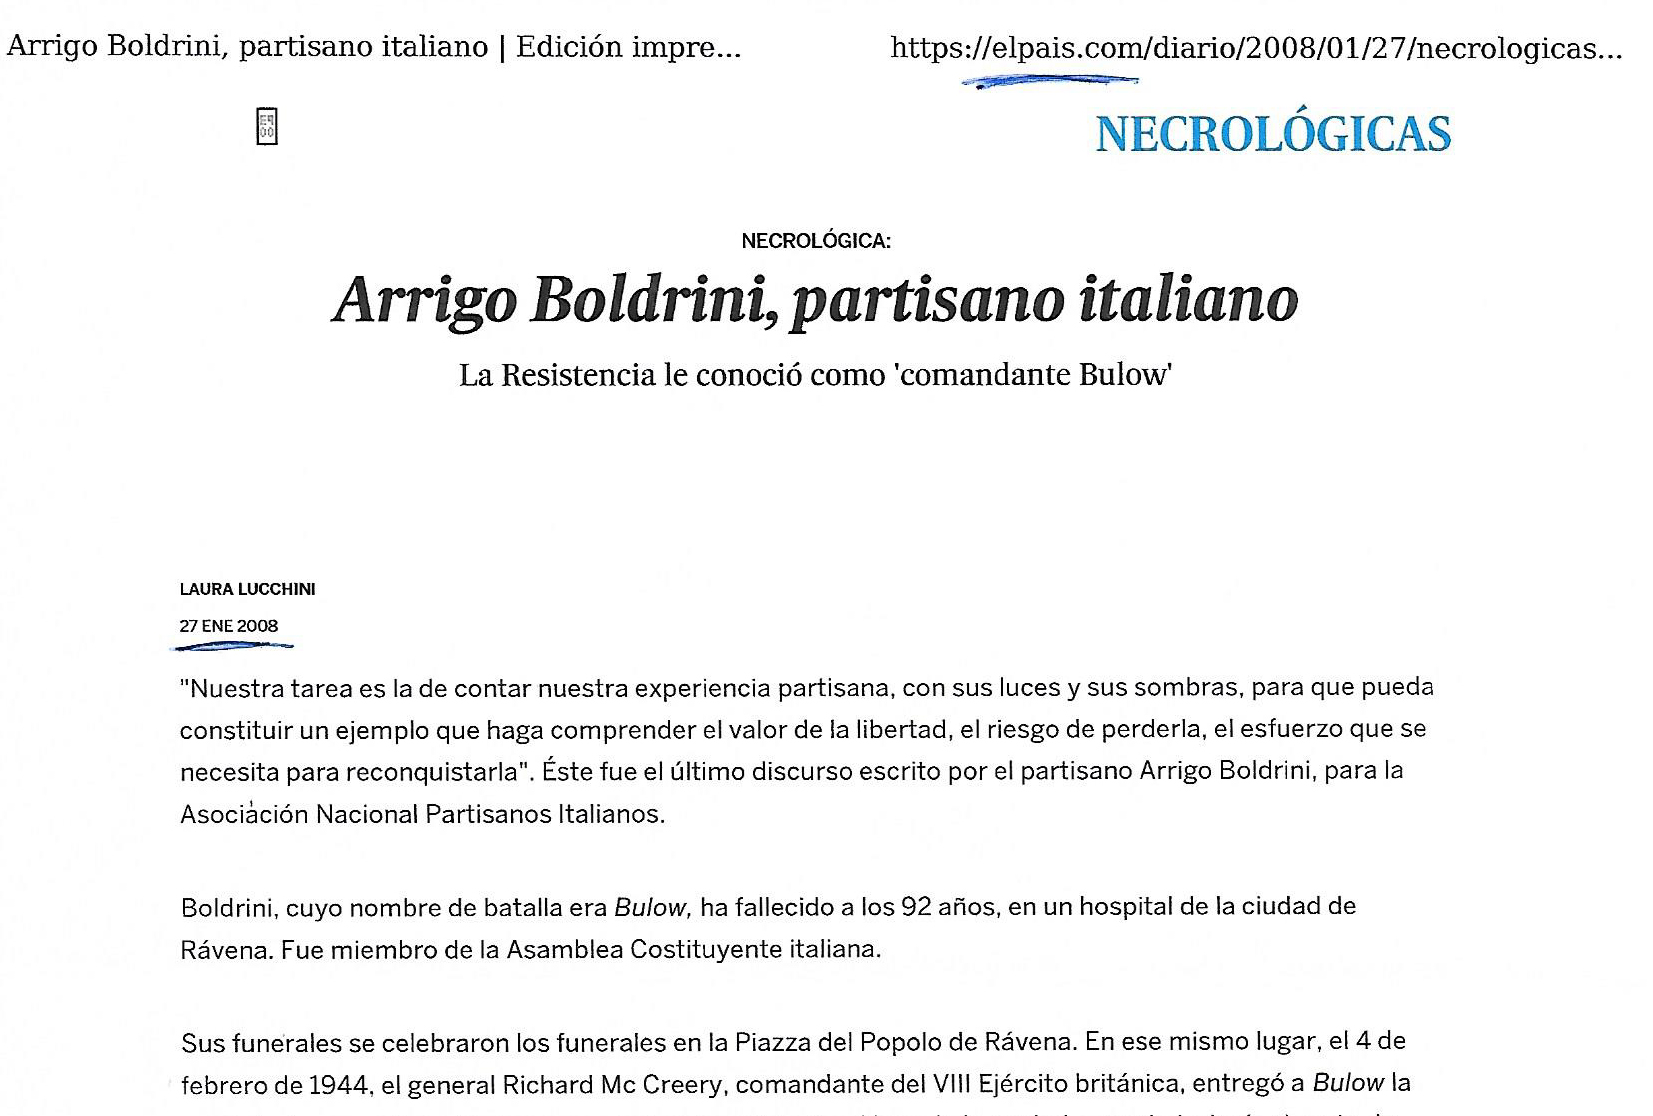 Articolo de El Pais, necrologio Boldrini 2008 (1)